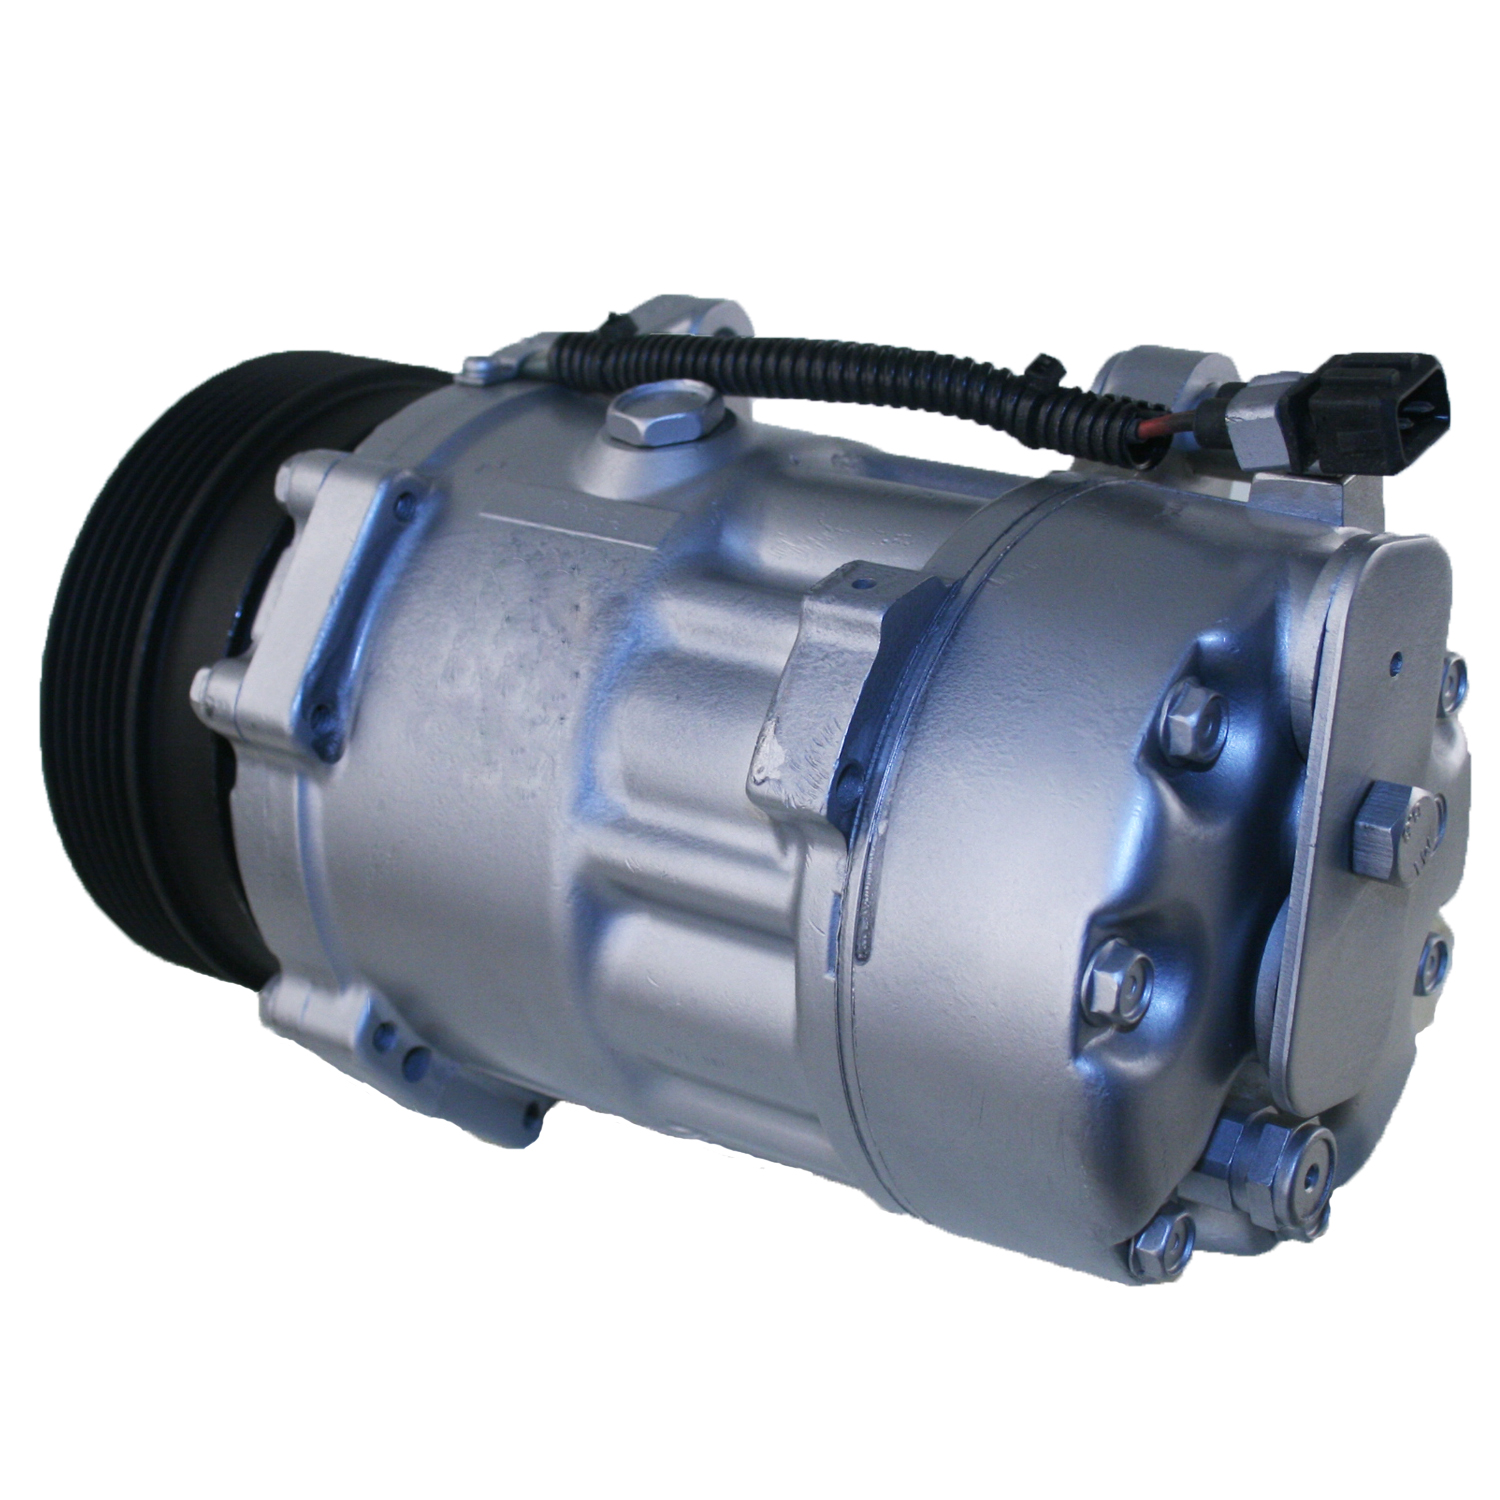 TCW Compressor 40750.601 Remanufactured Product Image field_60b6a13a6e67c